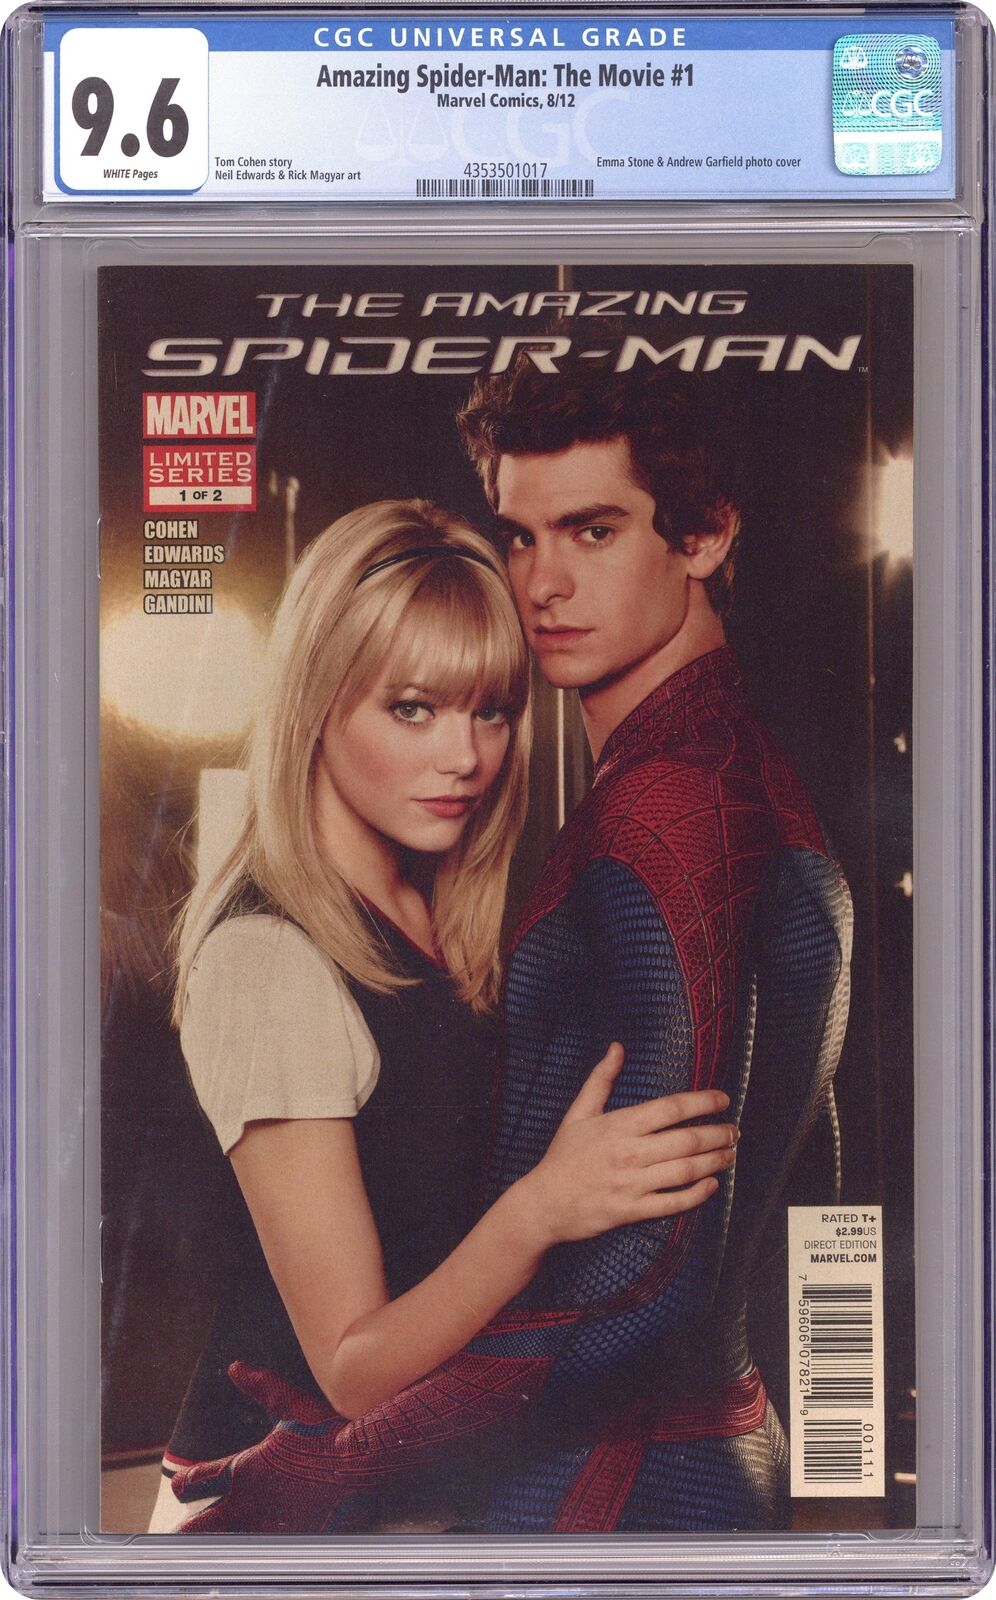 Amazing Spider-Man The Movie #1 CGC 9.6 2012 4353501017